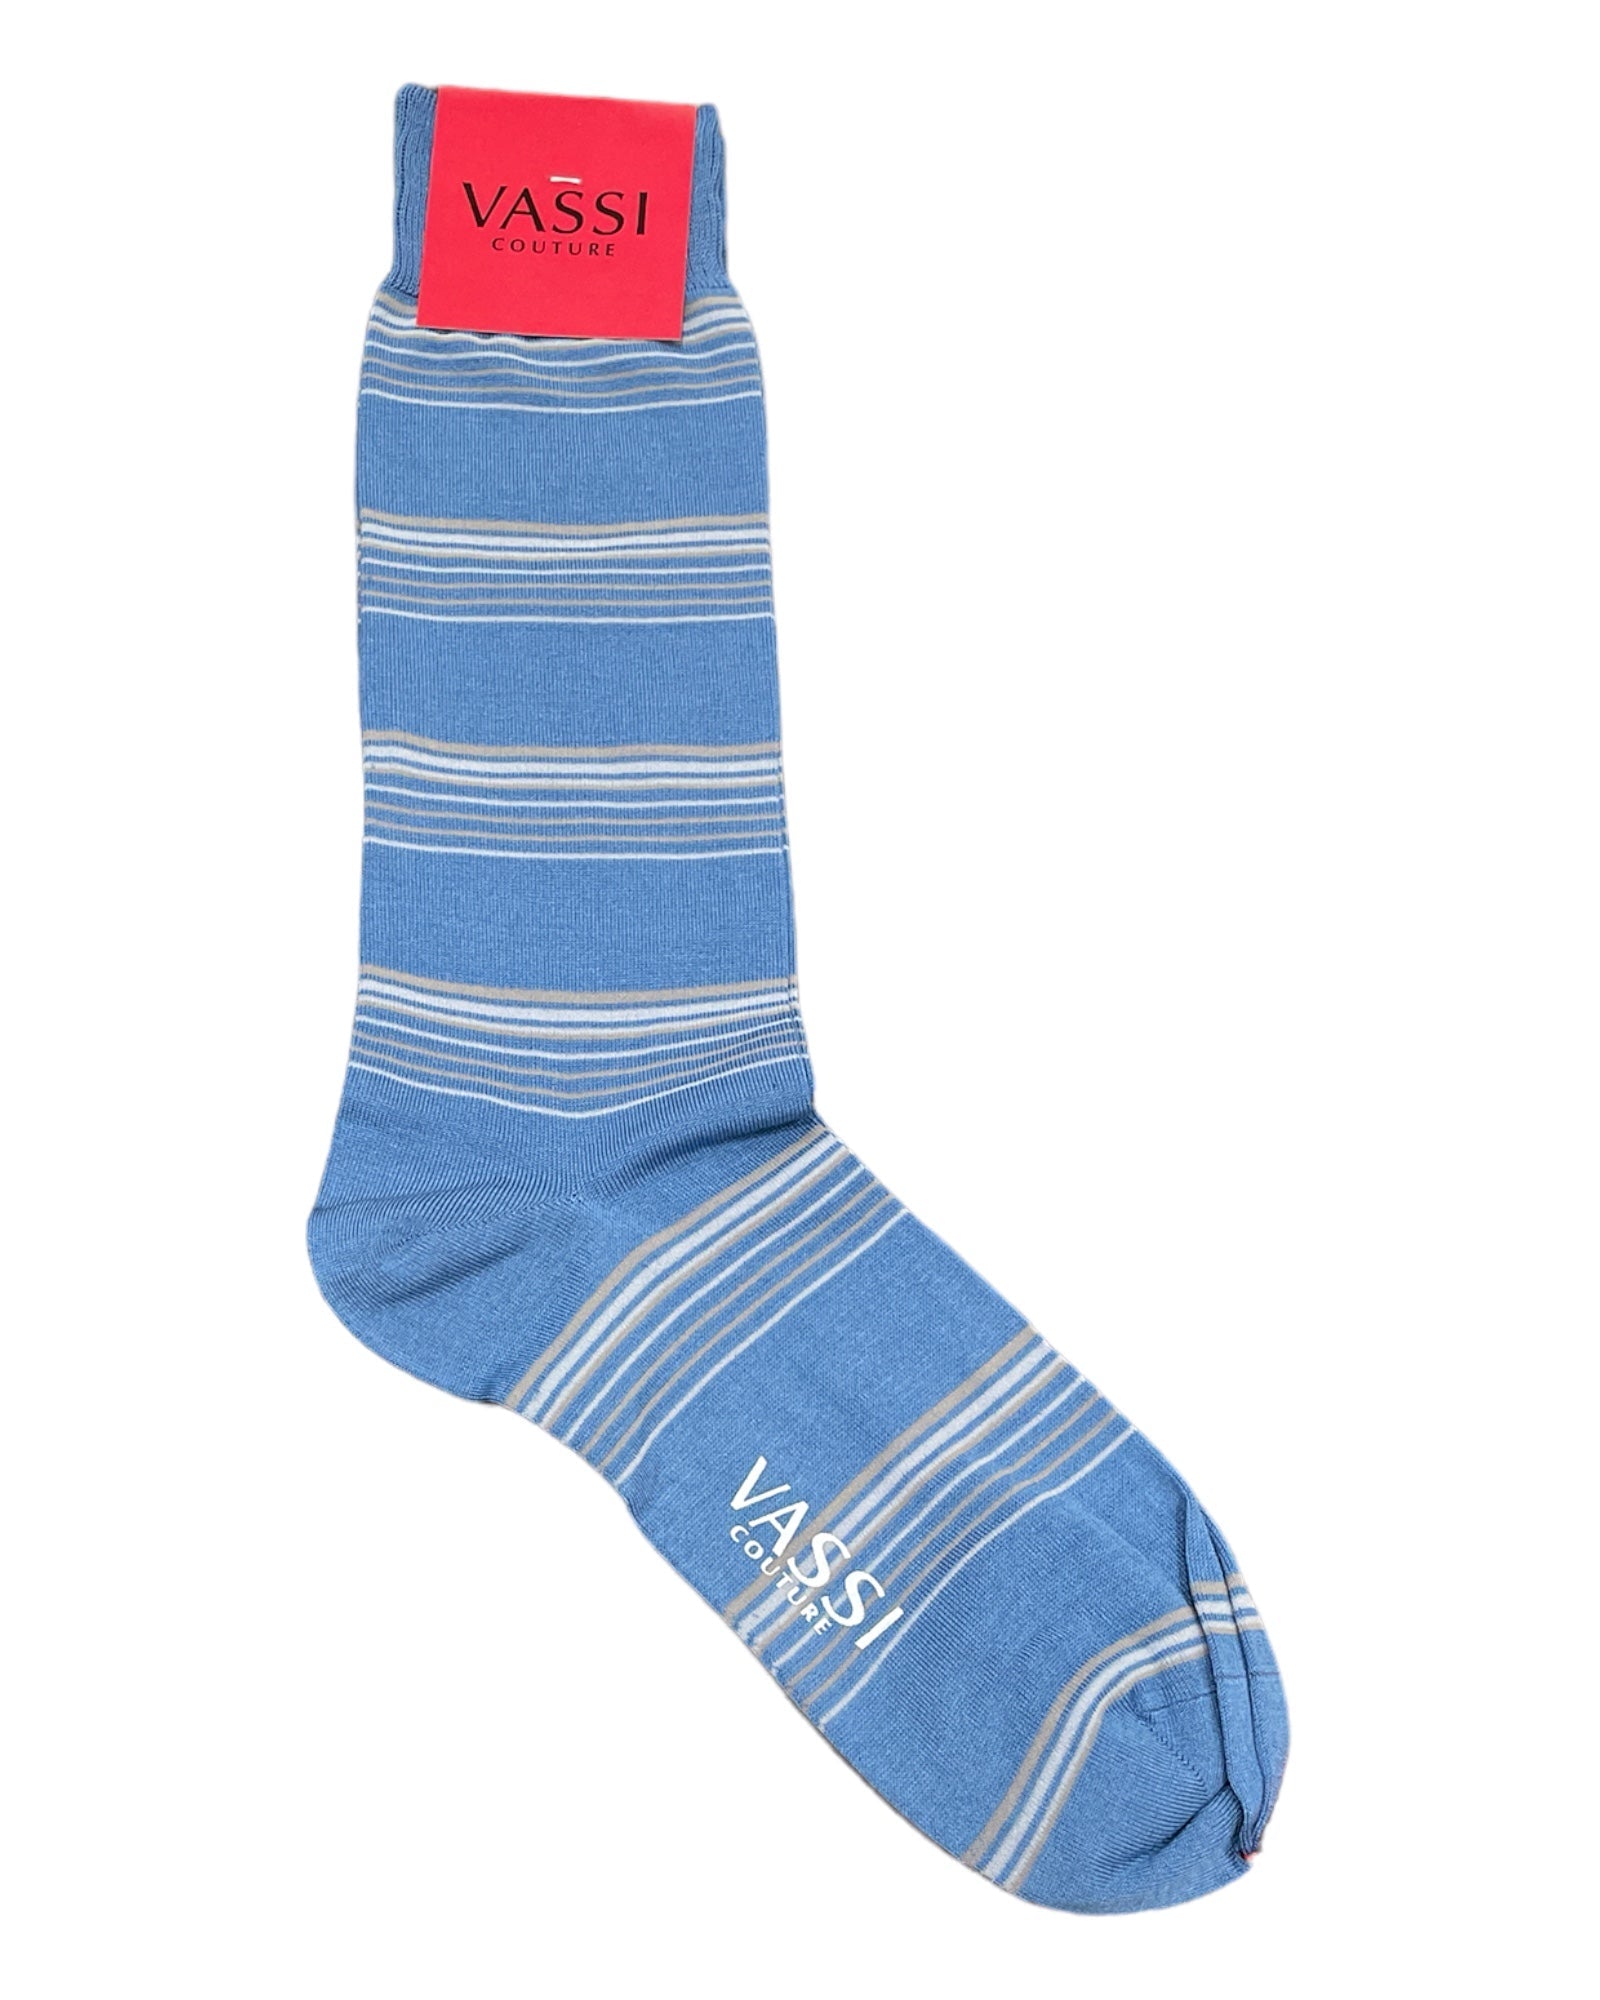 Light Blue with Taupe Horizontal Stripes Socks